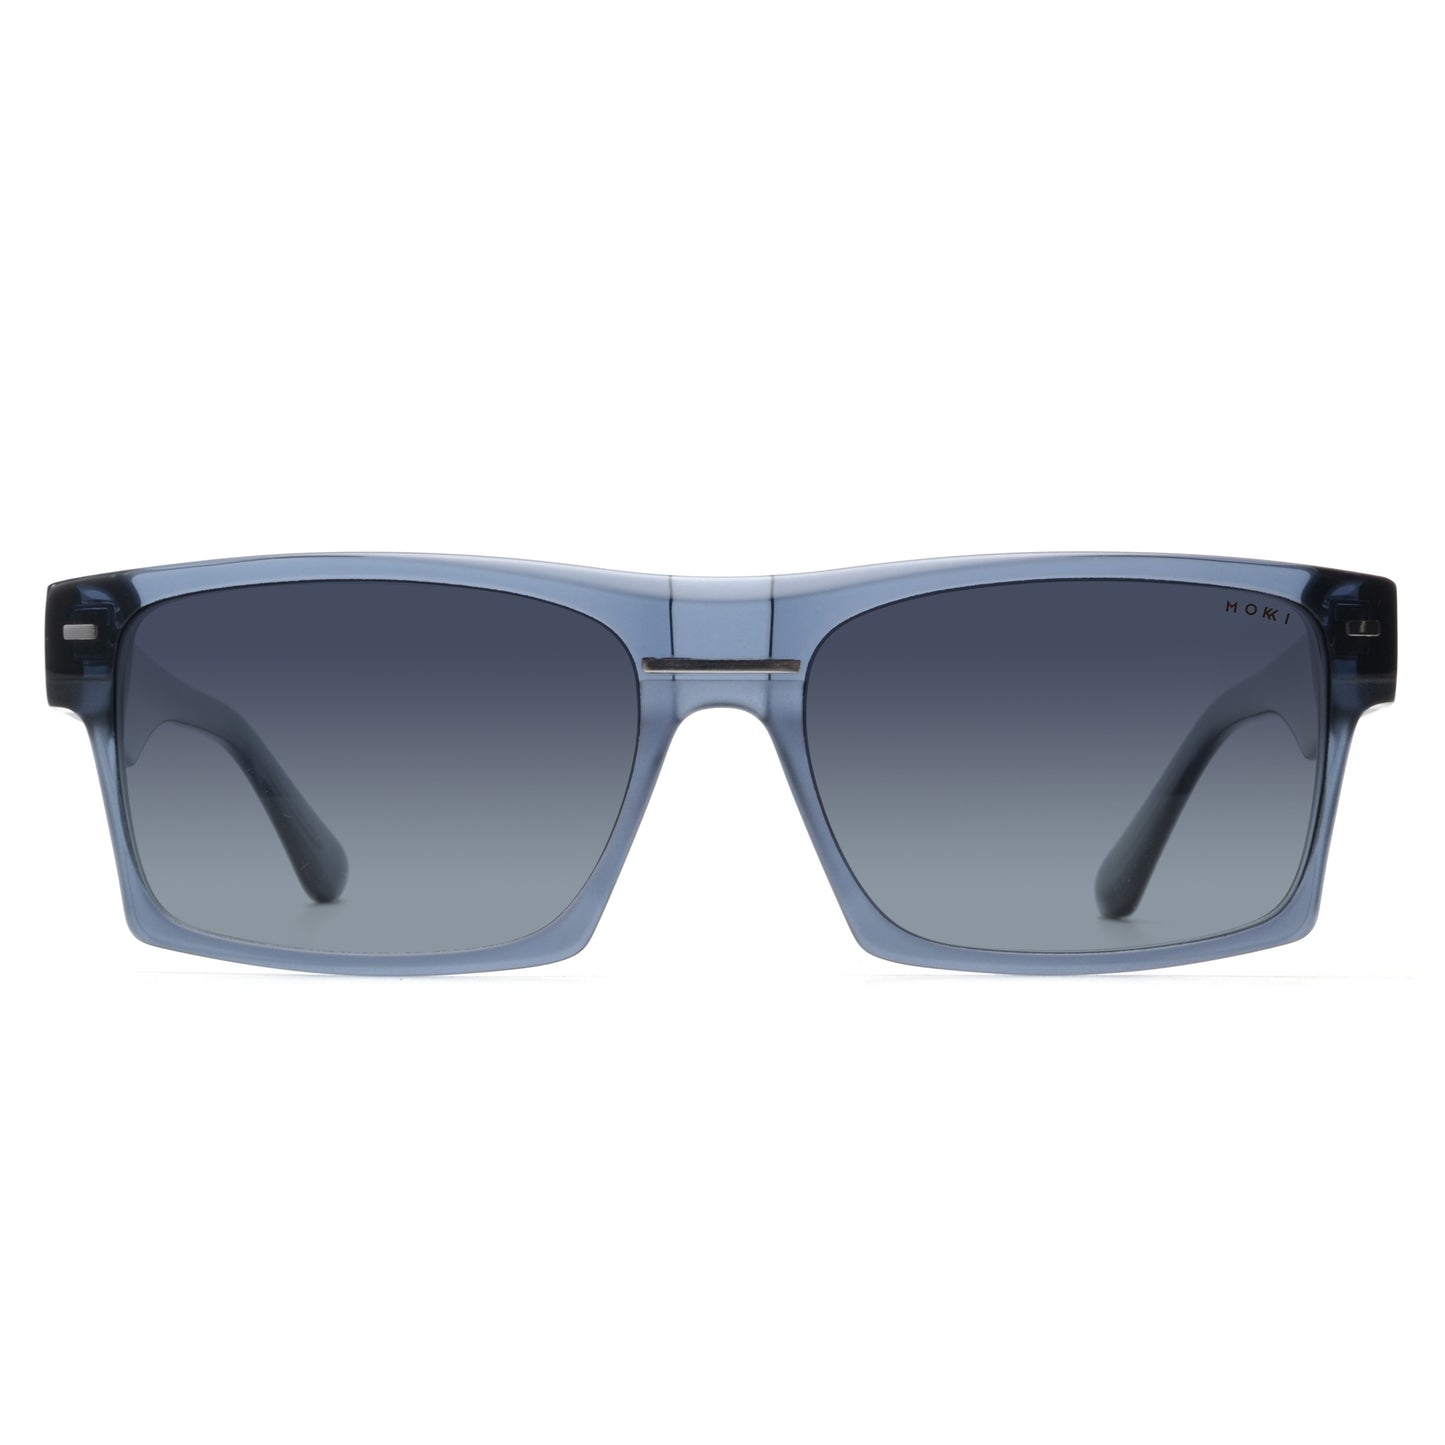 Mokki Sharp Square sunglasses in blue